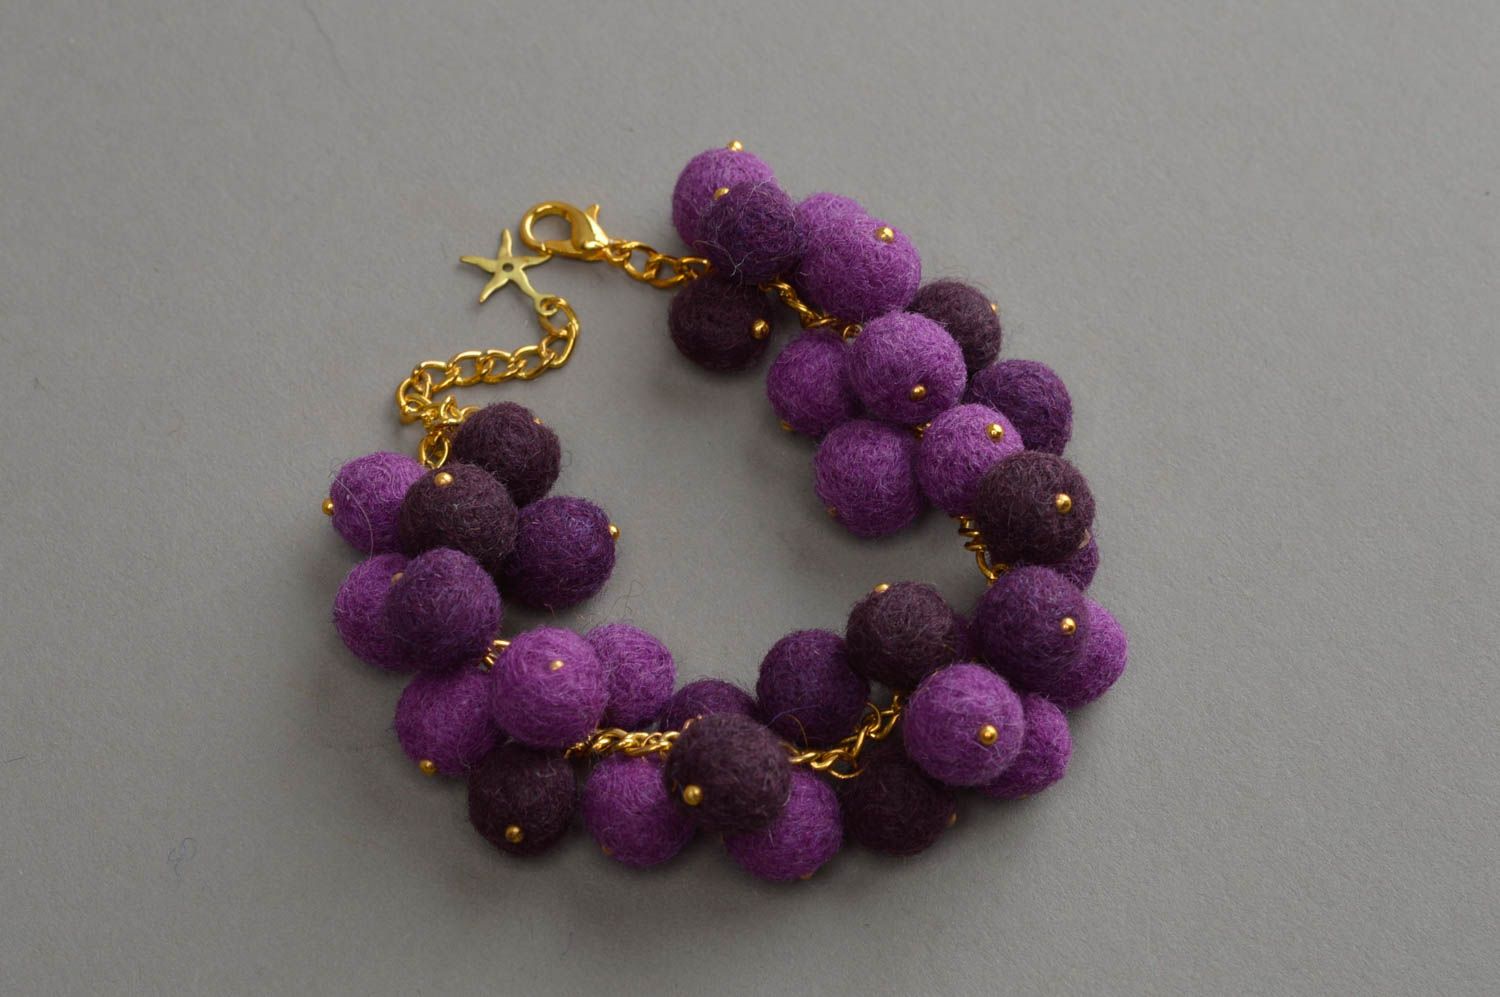 Handmade bracelet charm bracelet top gifts for women designer jewelry photo 2